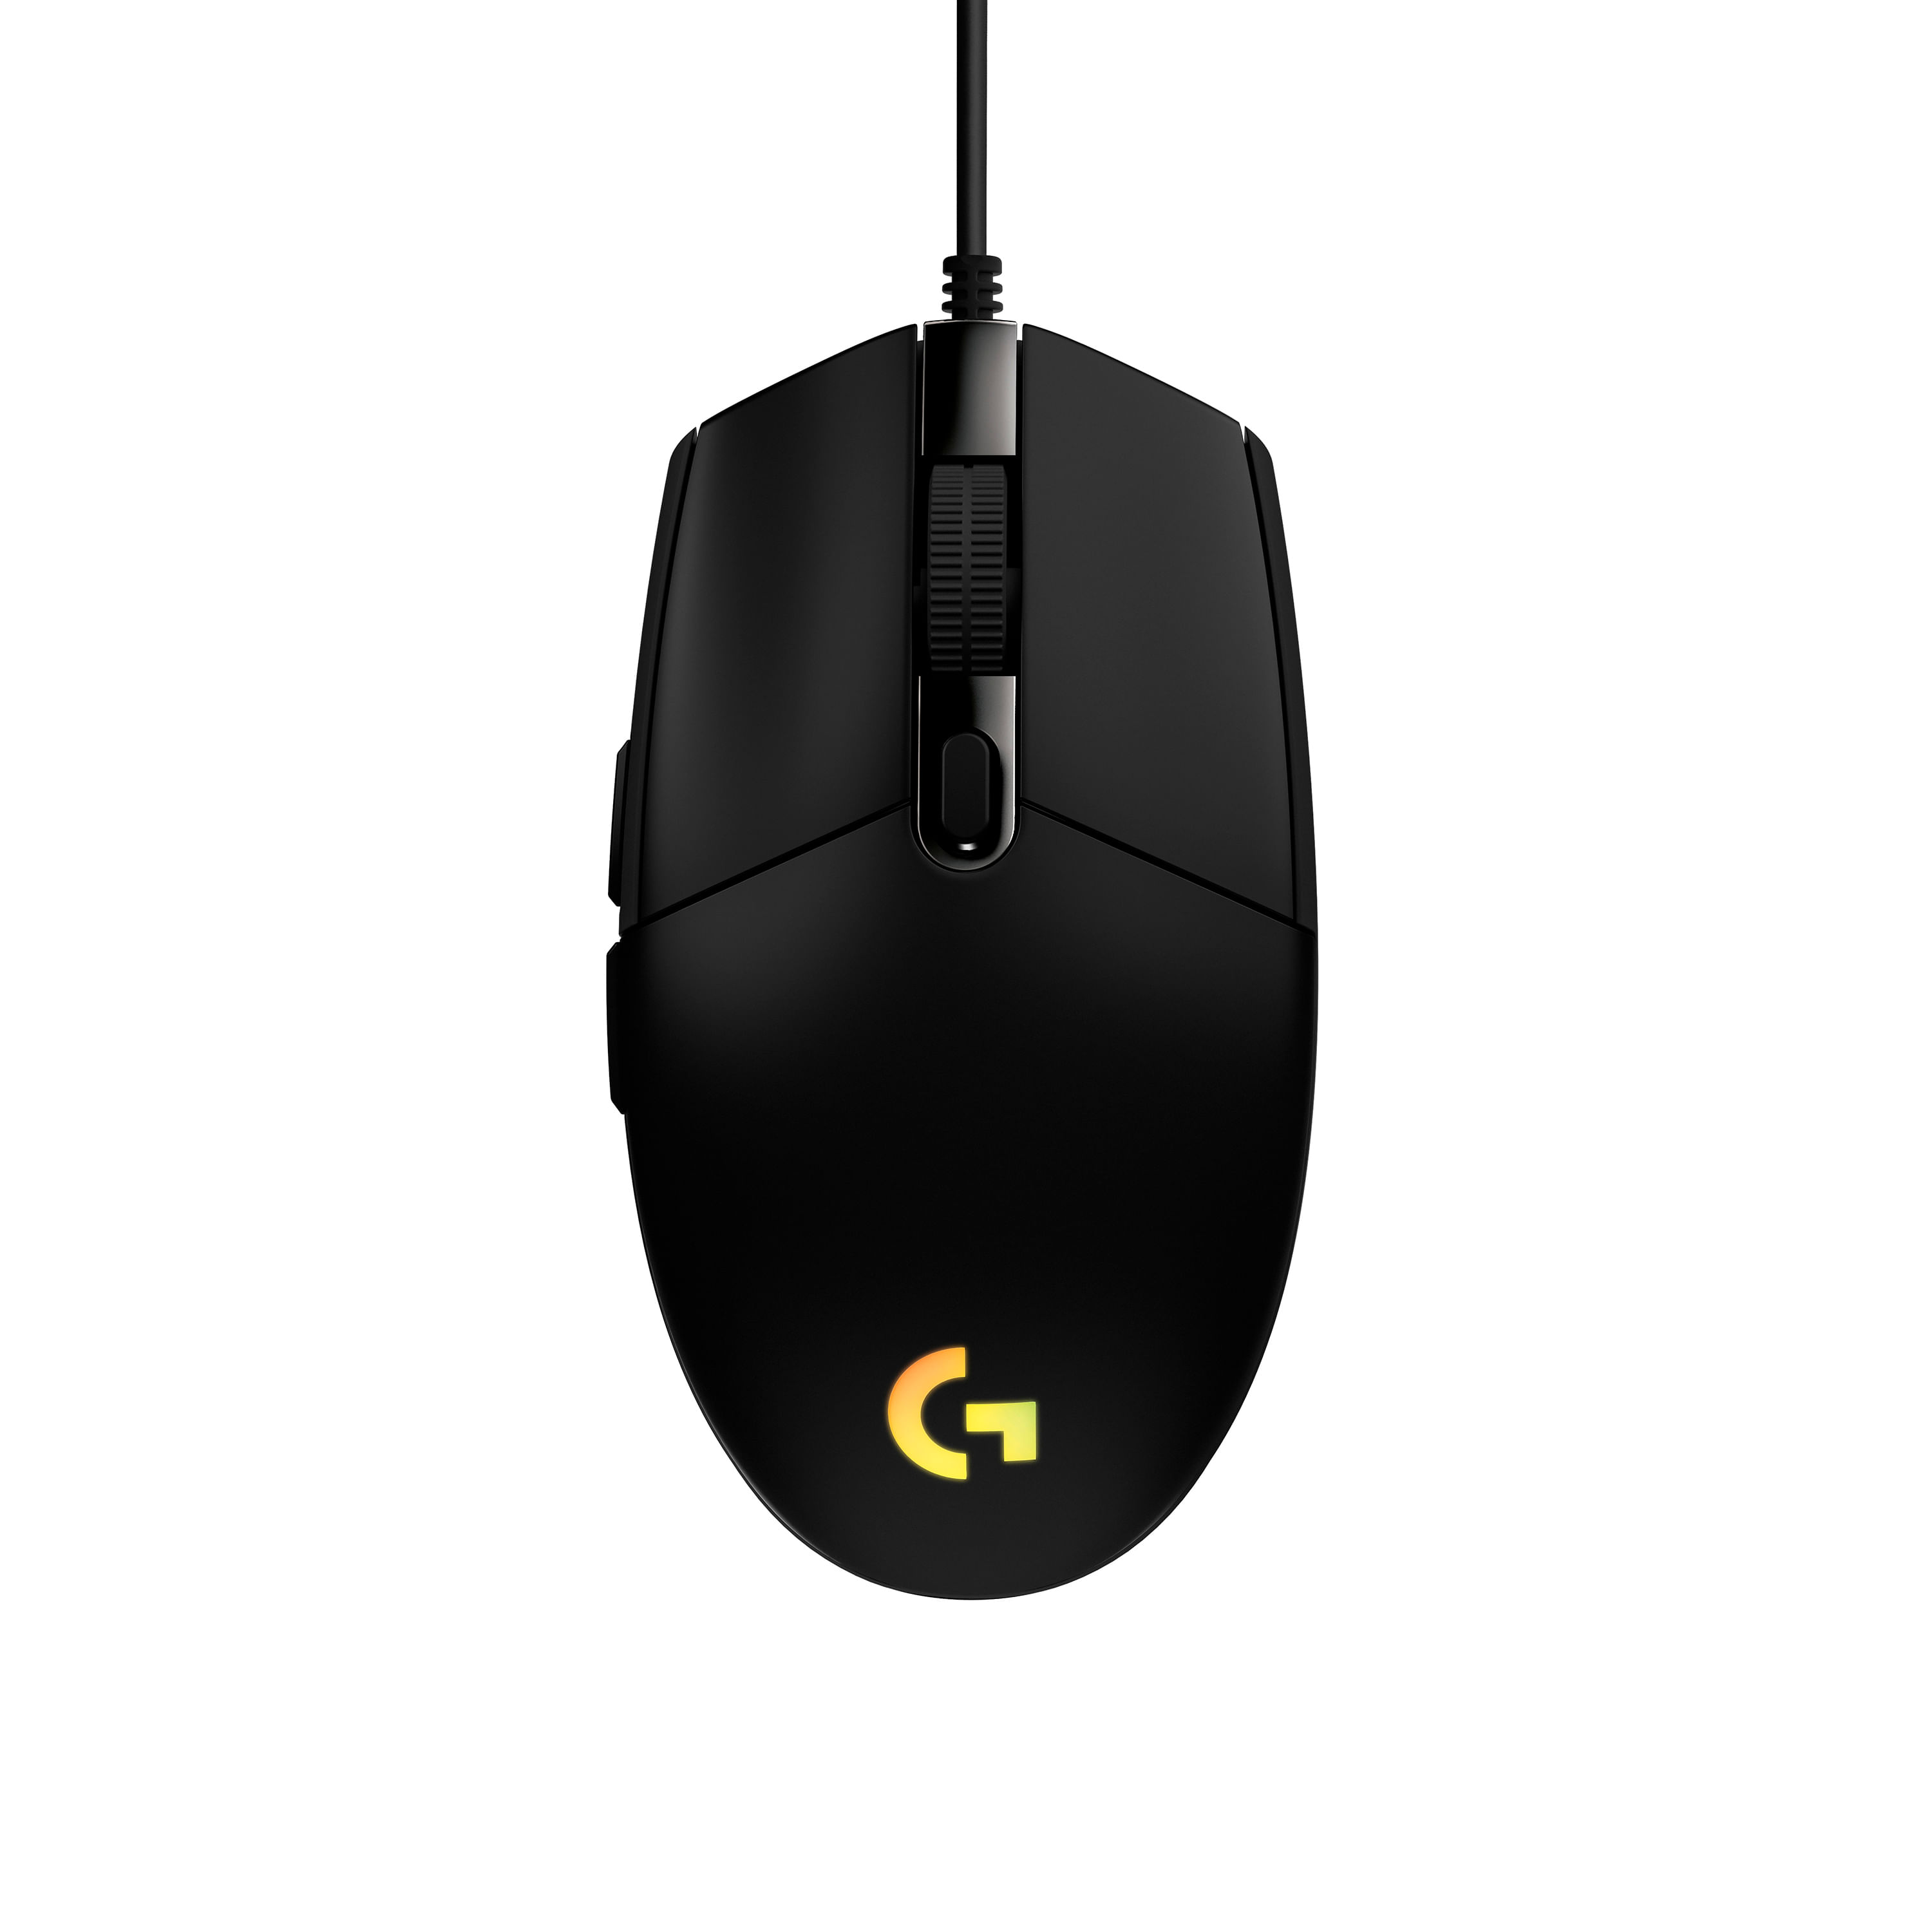 Comprar Mouse Gaming Blackweb Color Negro Para Pc